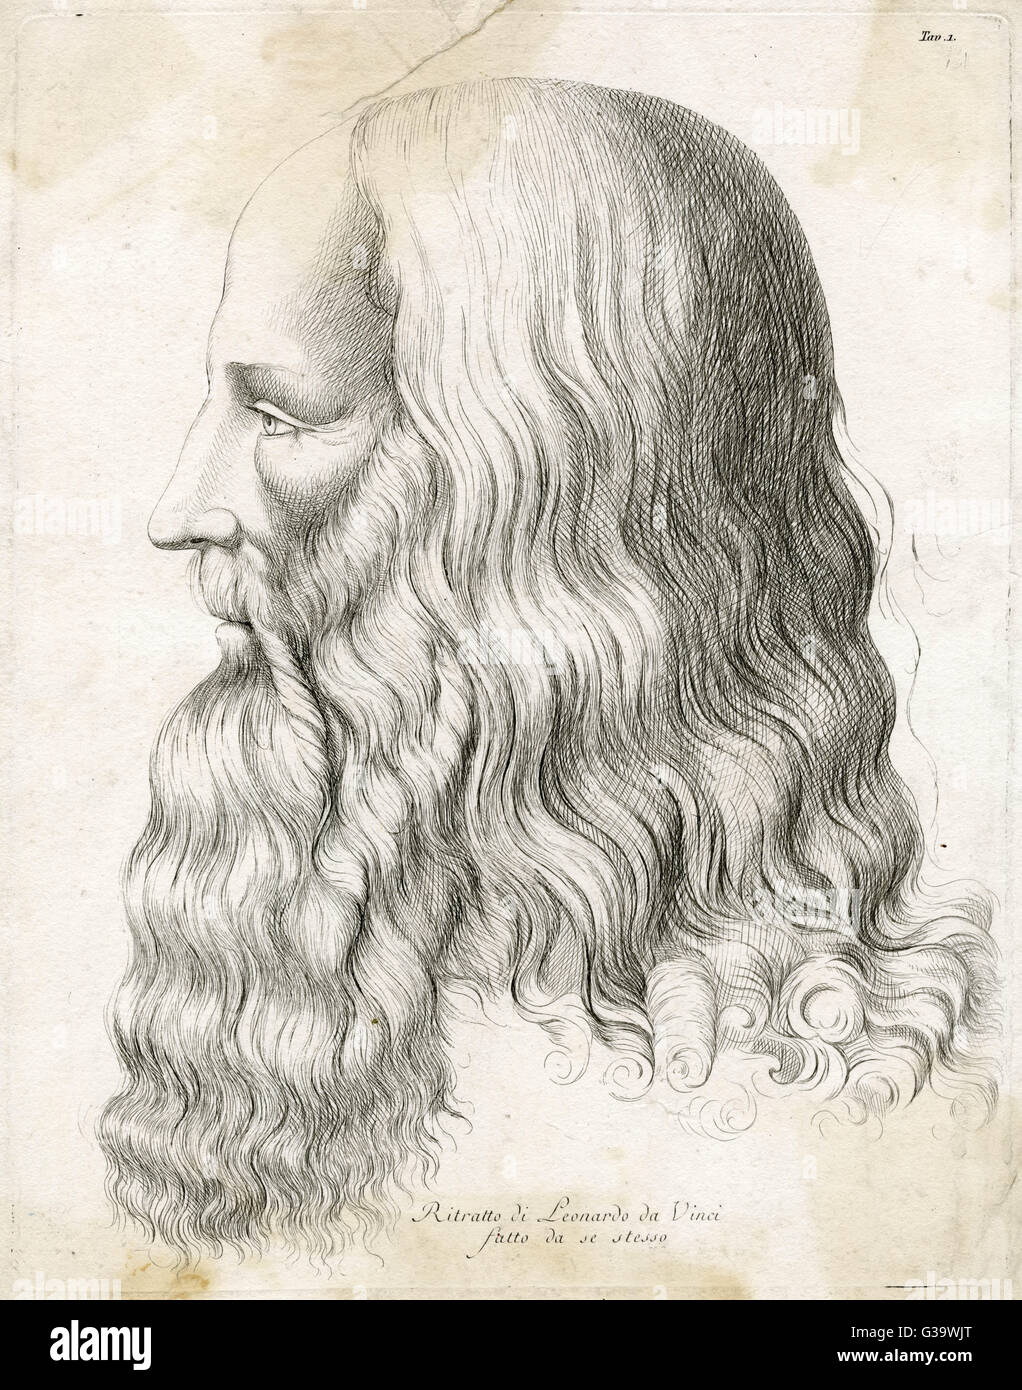 El artista italiano LEONARDO DA VINCI: autorretrato en el perfil Fecha: 1452 - 1519 Foto de stock